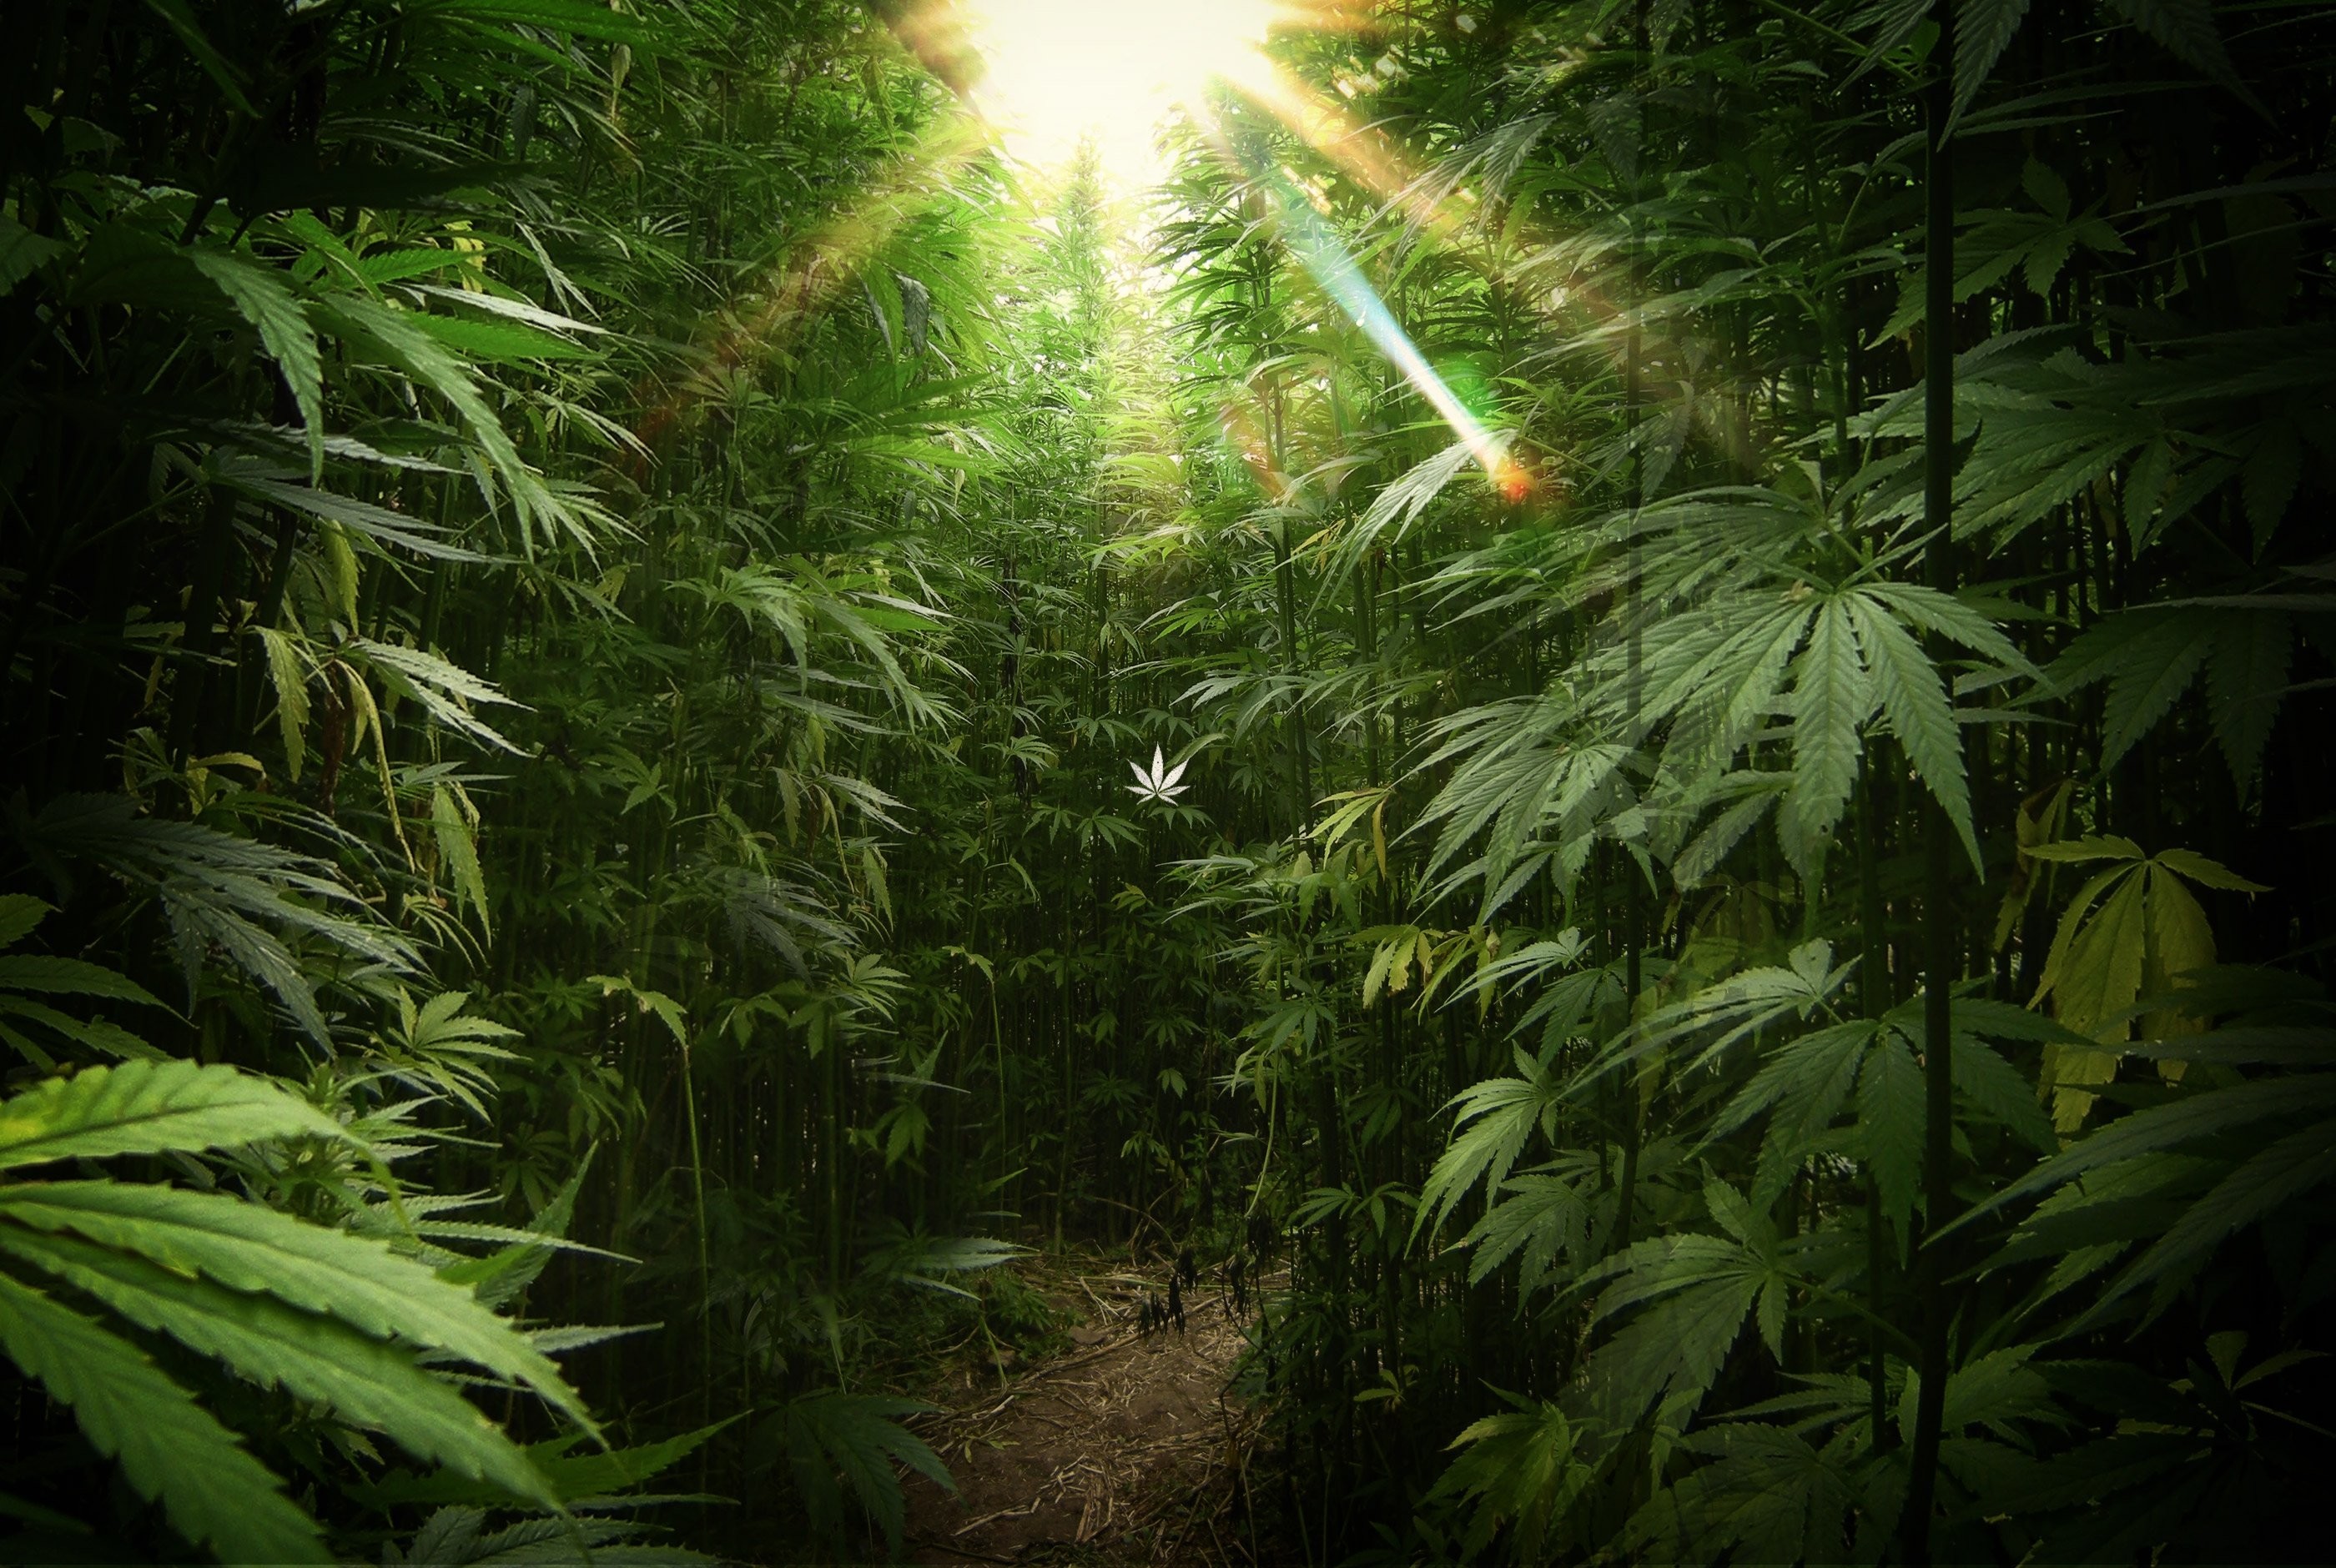 2800x1880 Weed drugs marijuana 420 nature psychedelic plant cannabis rasta reggae  drug trippy wallpaper |  | 1012105 | WallpaperUP